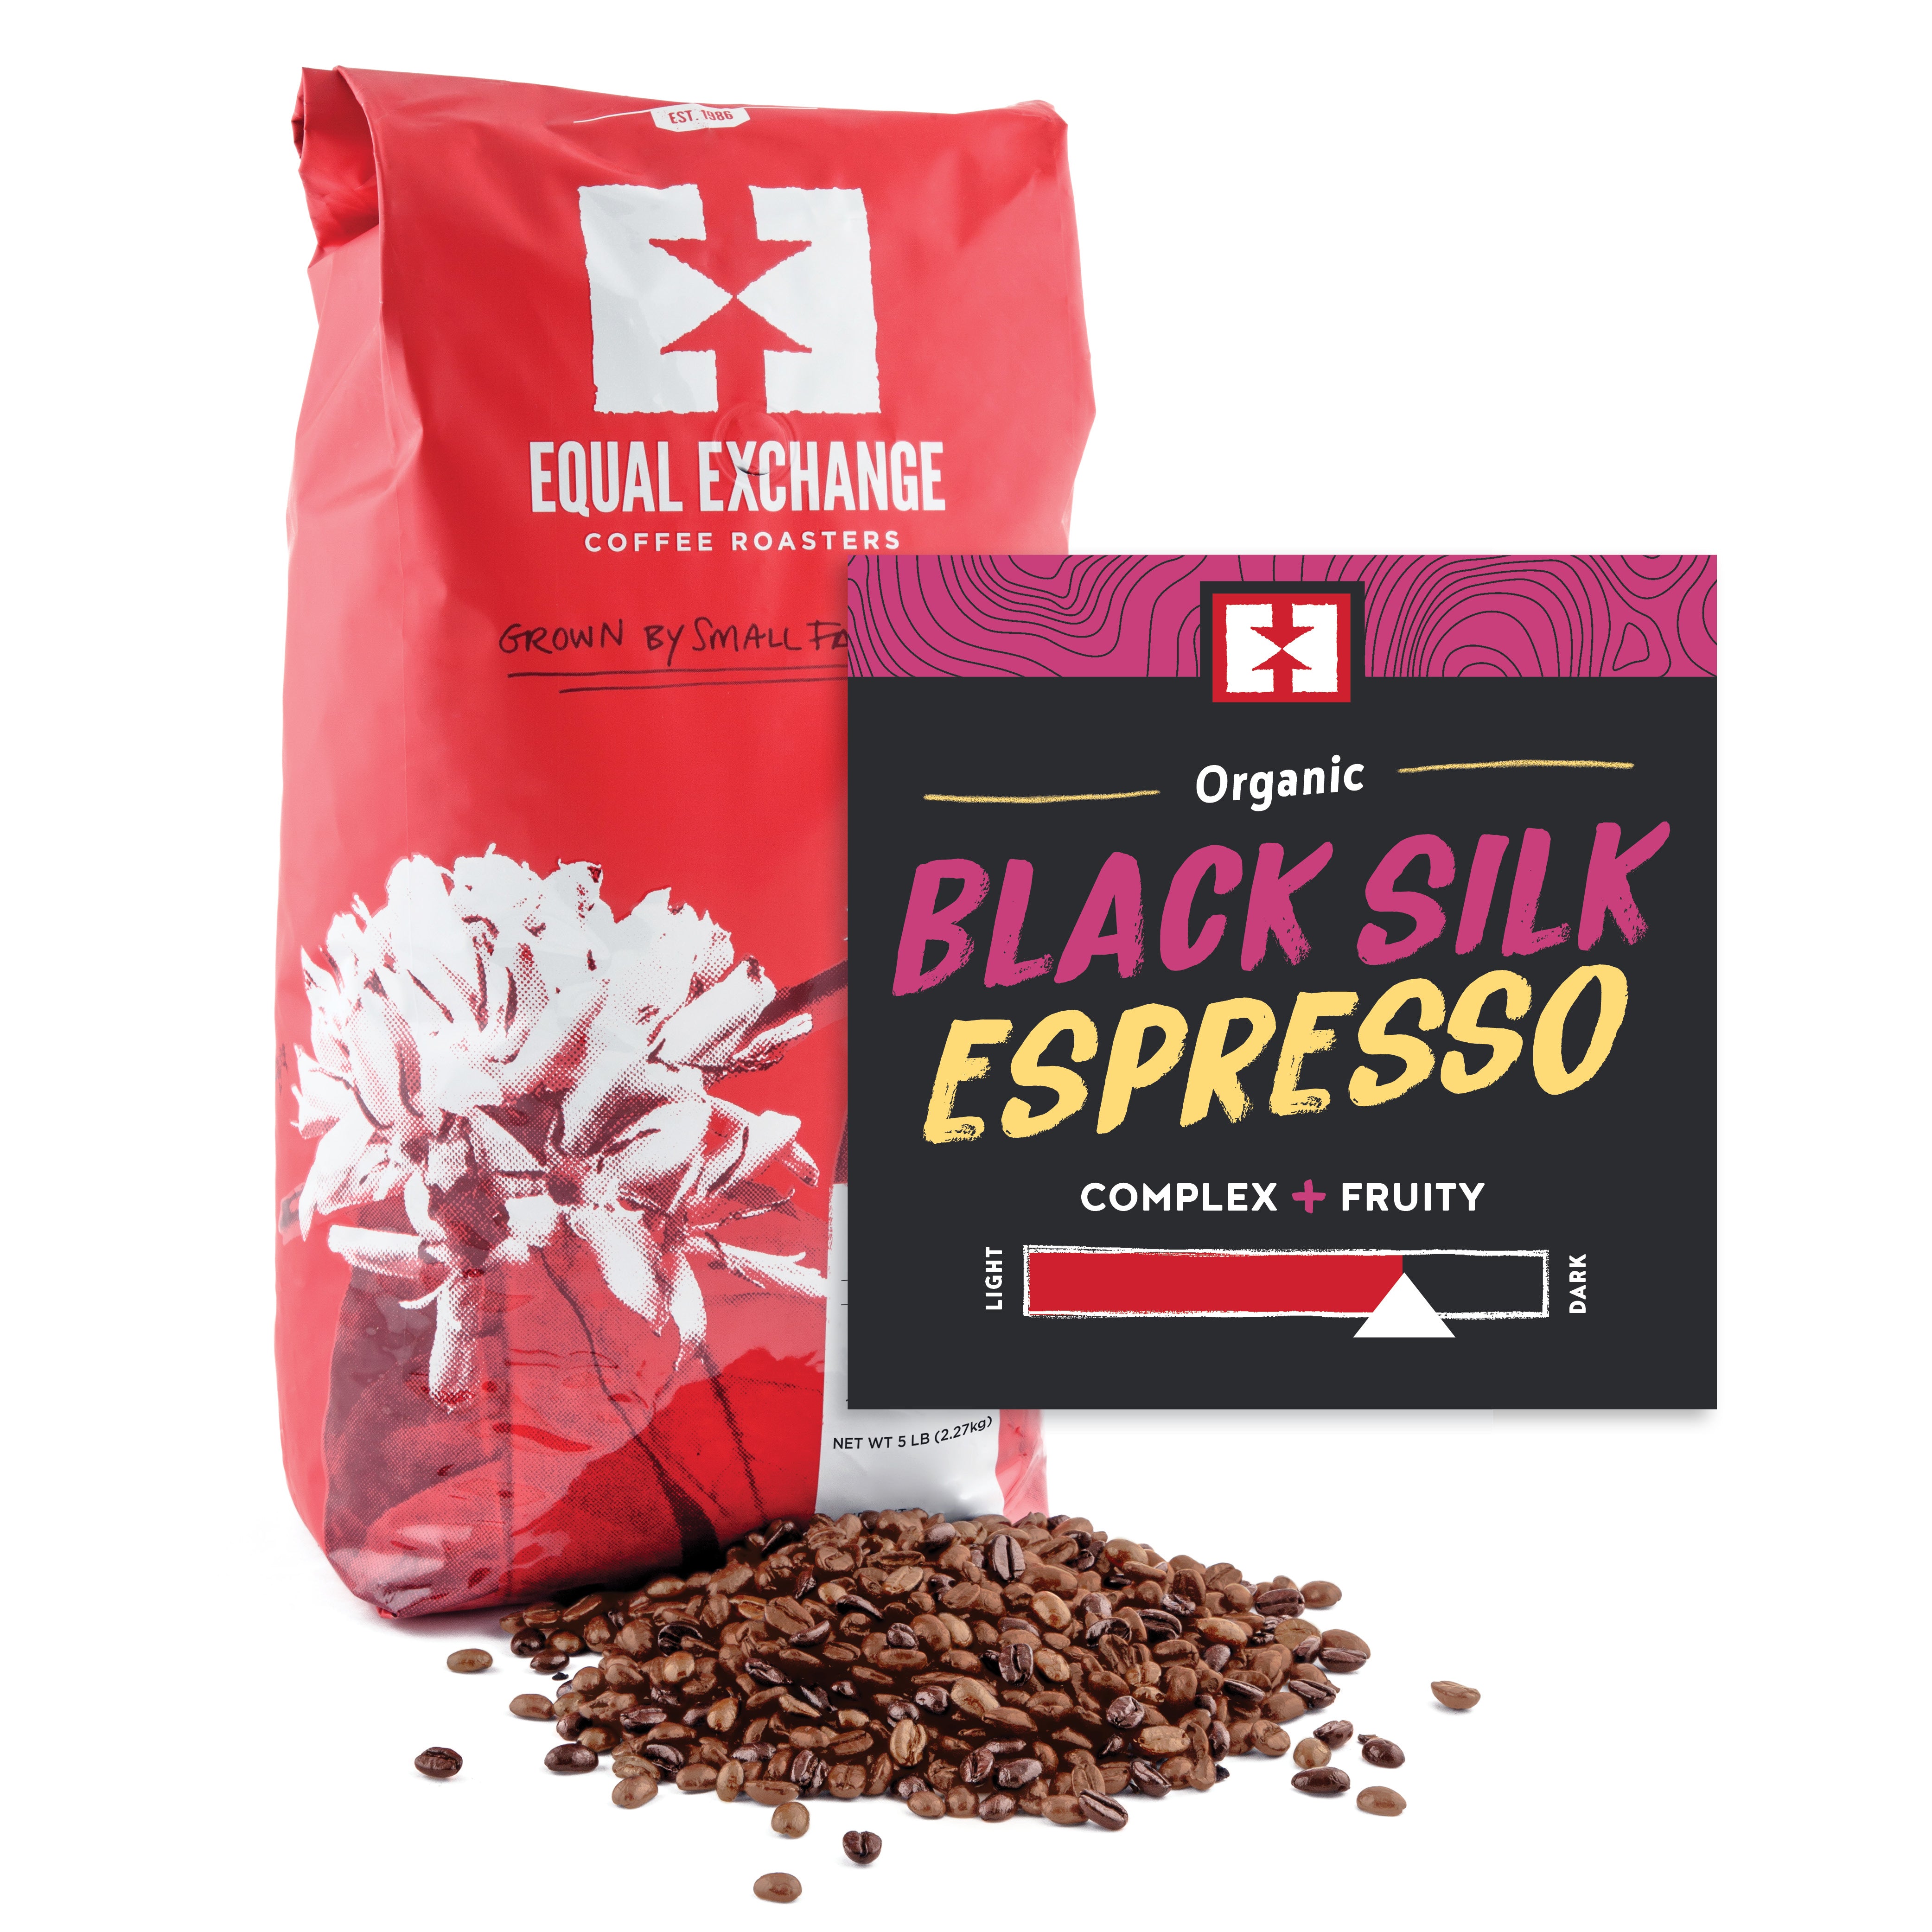 Ground Coffee for Espresso Machine - Two Chimps Coffee